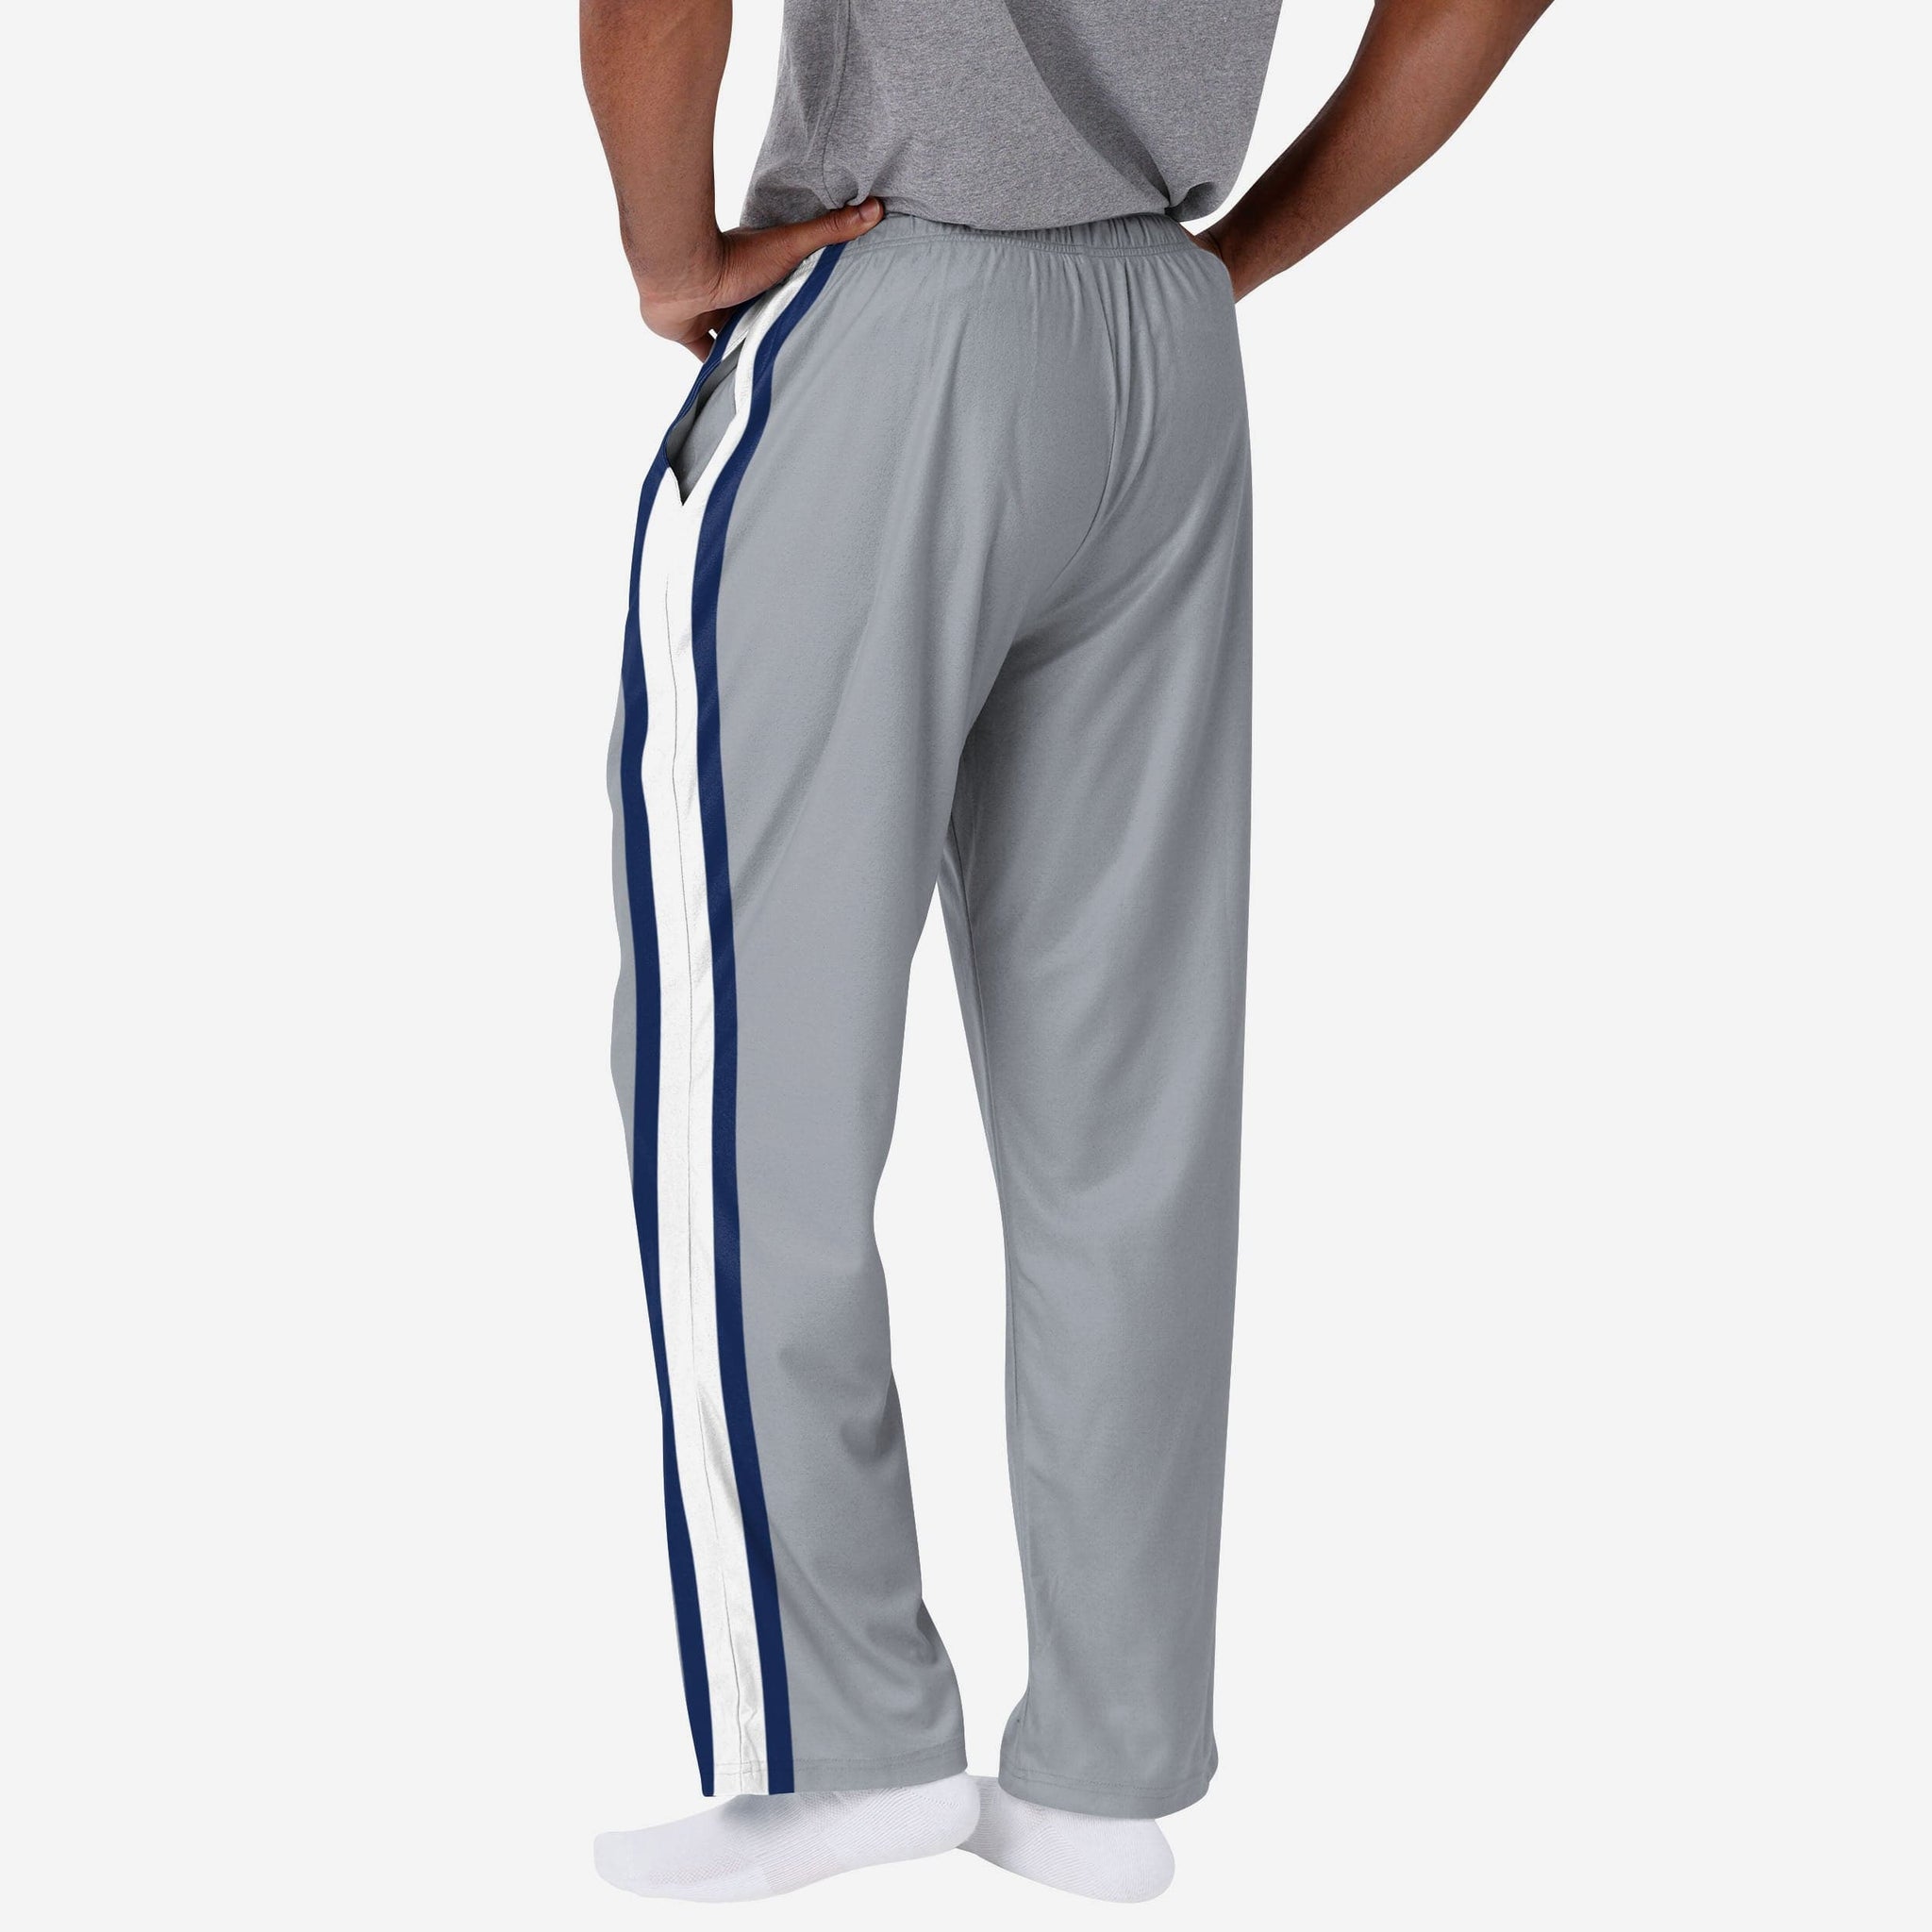 Official Miami Heat Pants, Leggings, Pajama Pants, Joggers